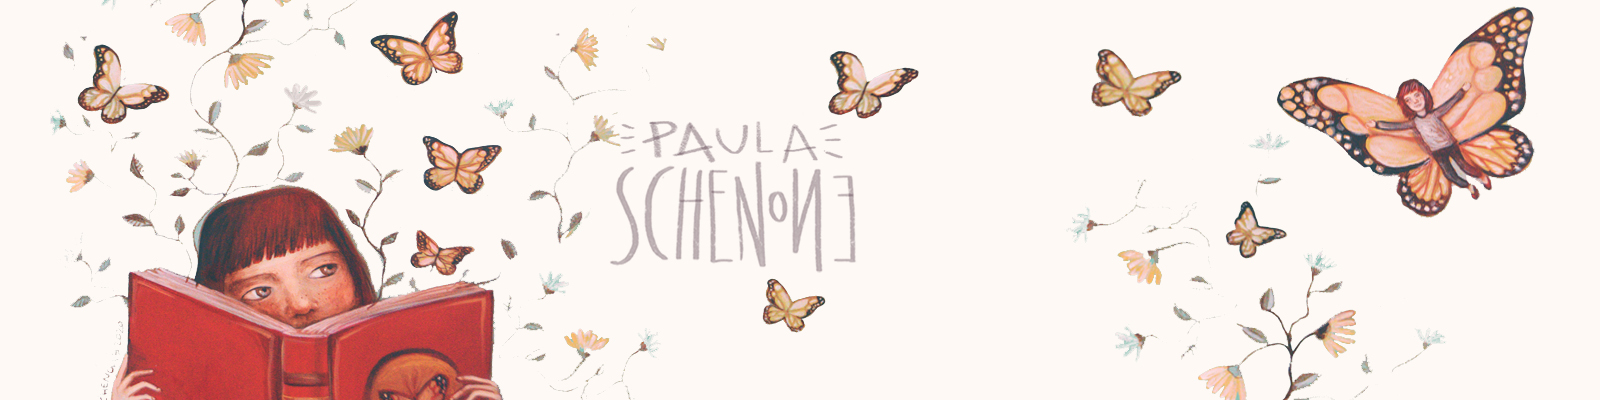             Paula Schenone